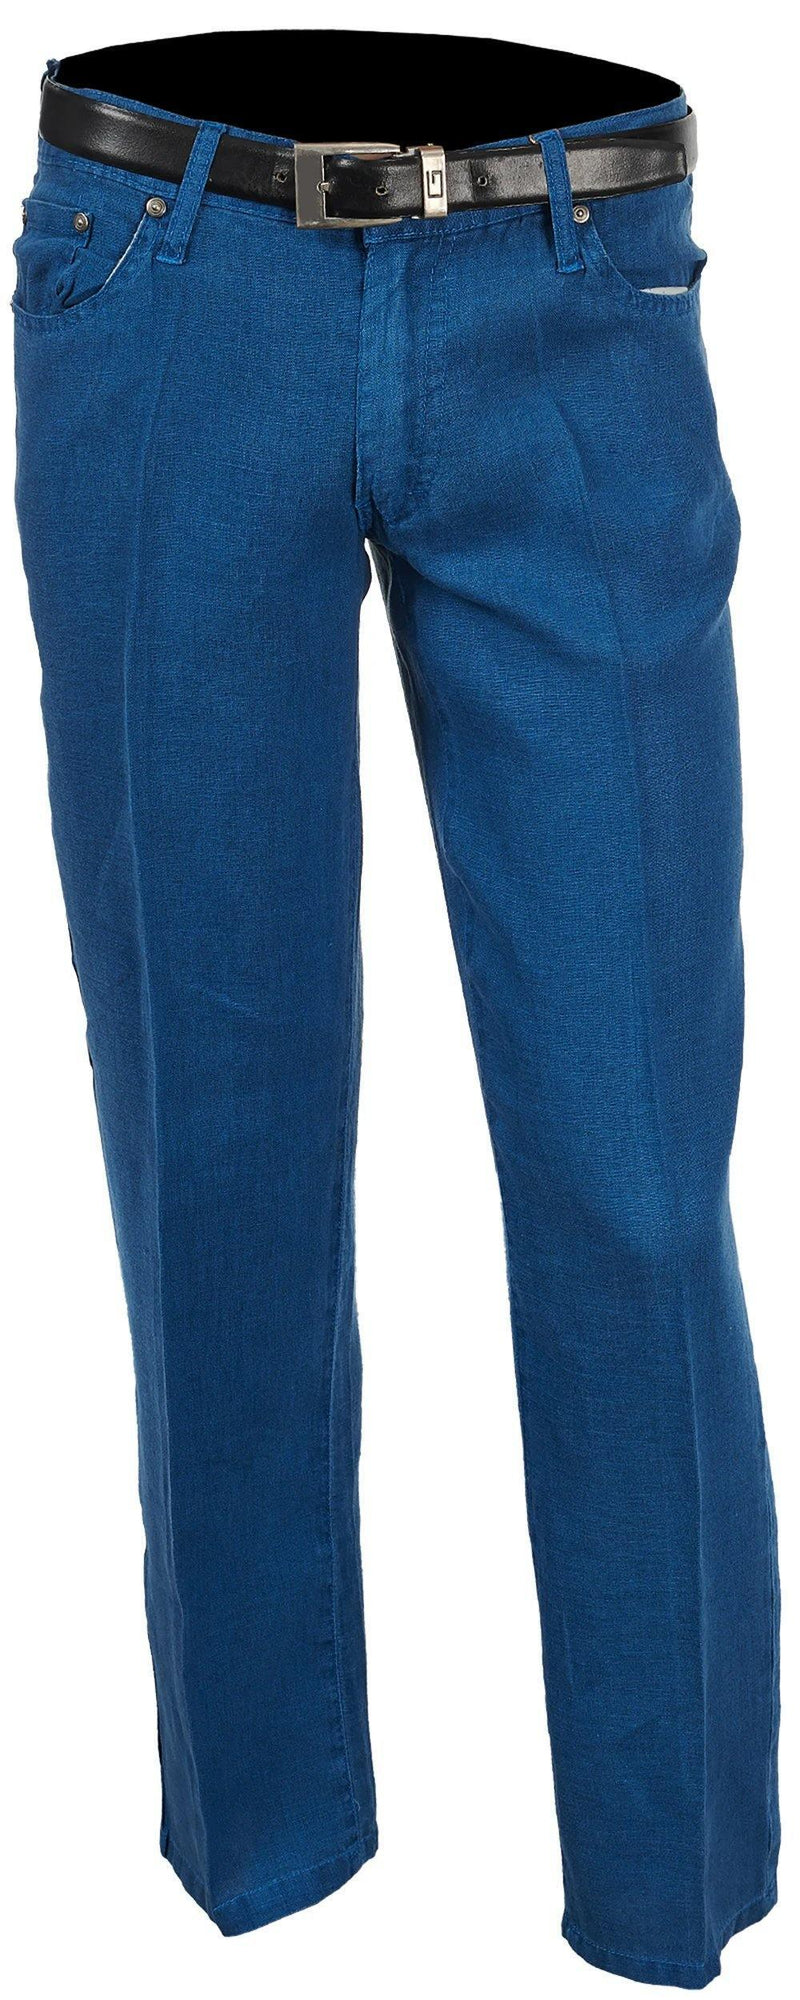 Skinny Jeans in Cobalt Blue